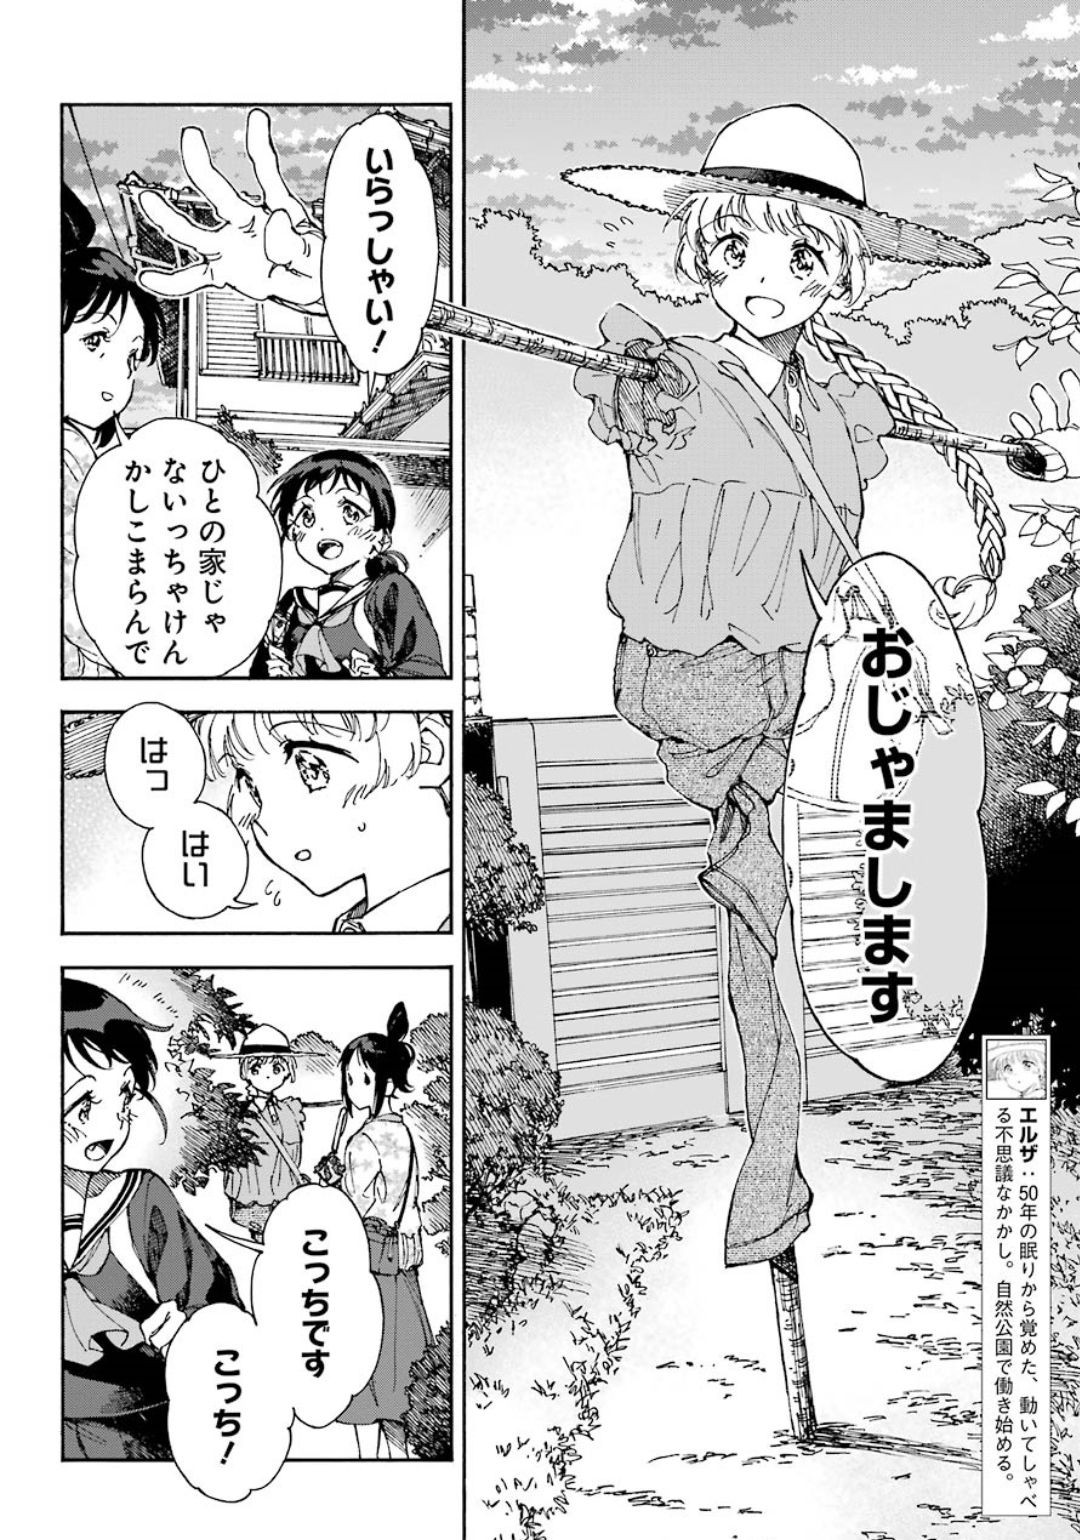 Hotomeku-kakashi - Chapter 04-1 - Page 2